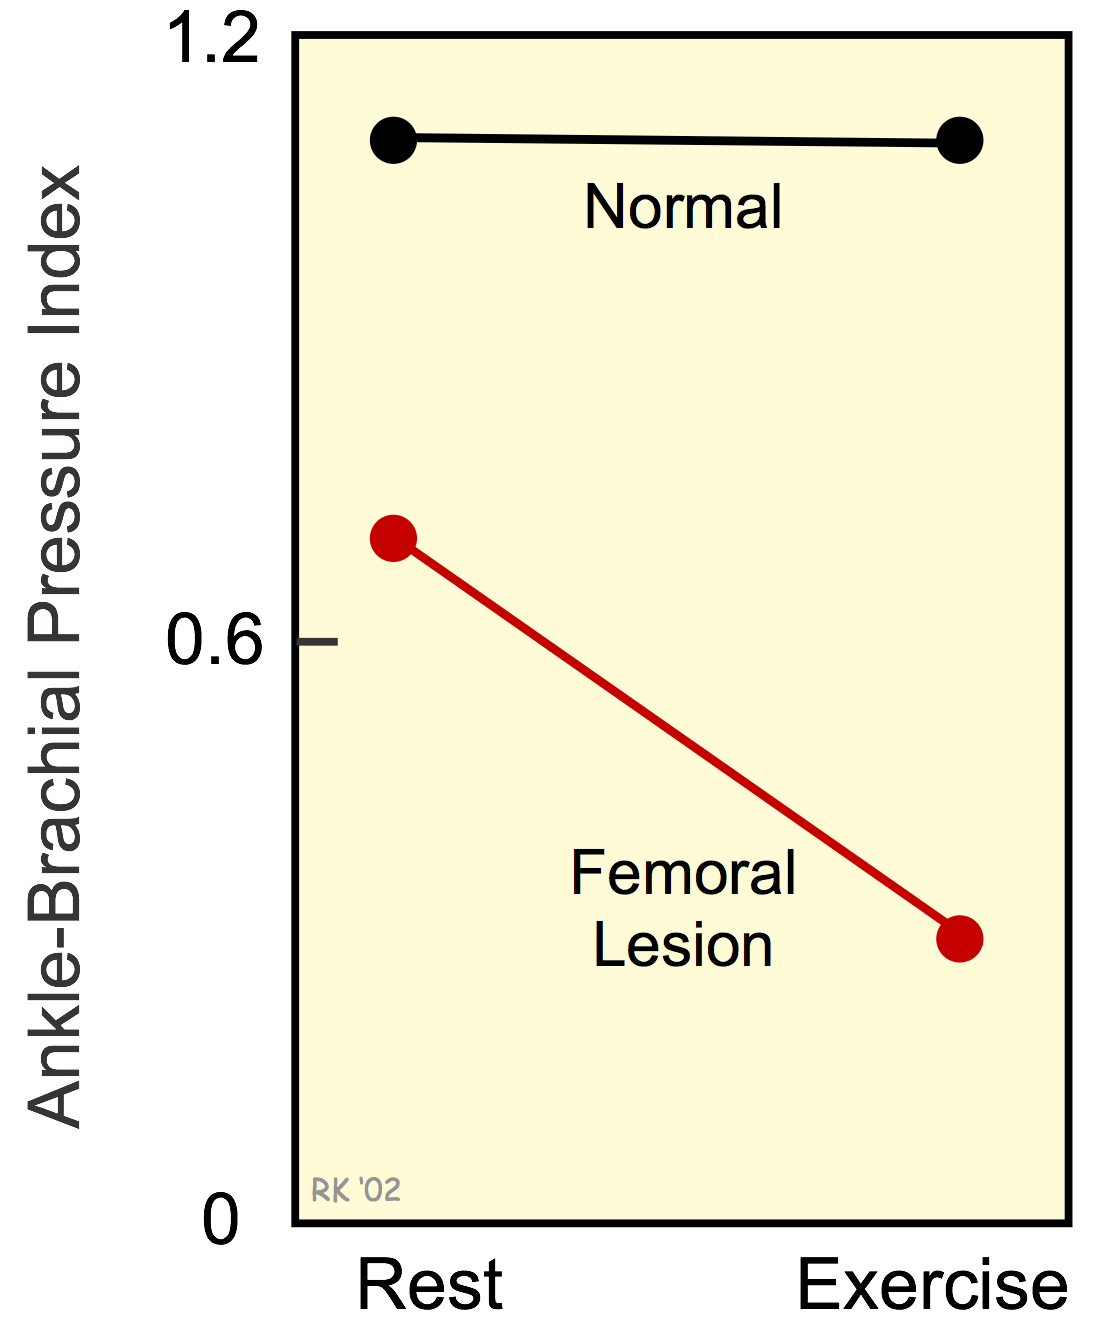 Ankle-brachial pressure index